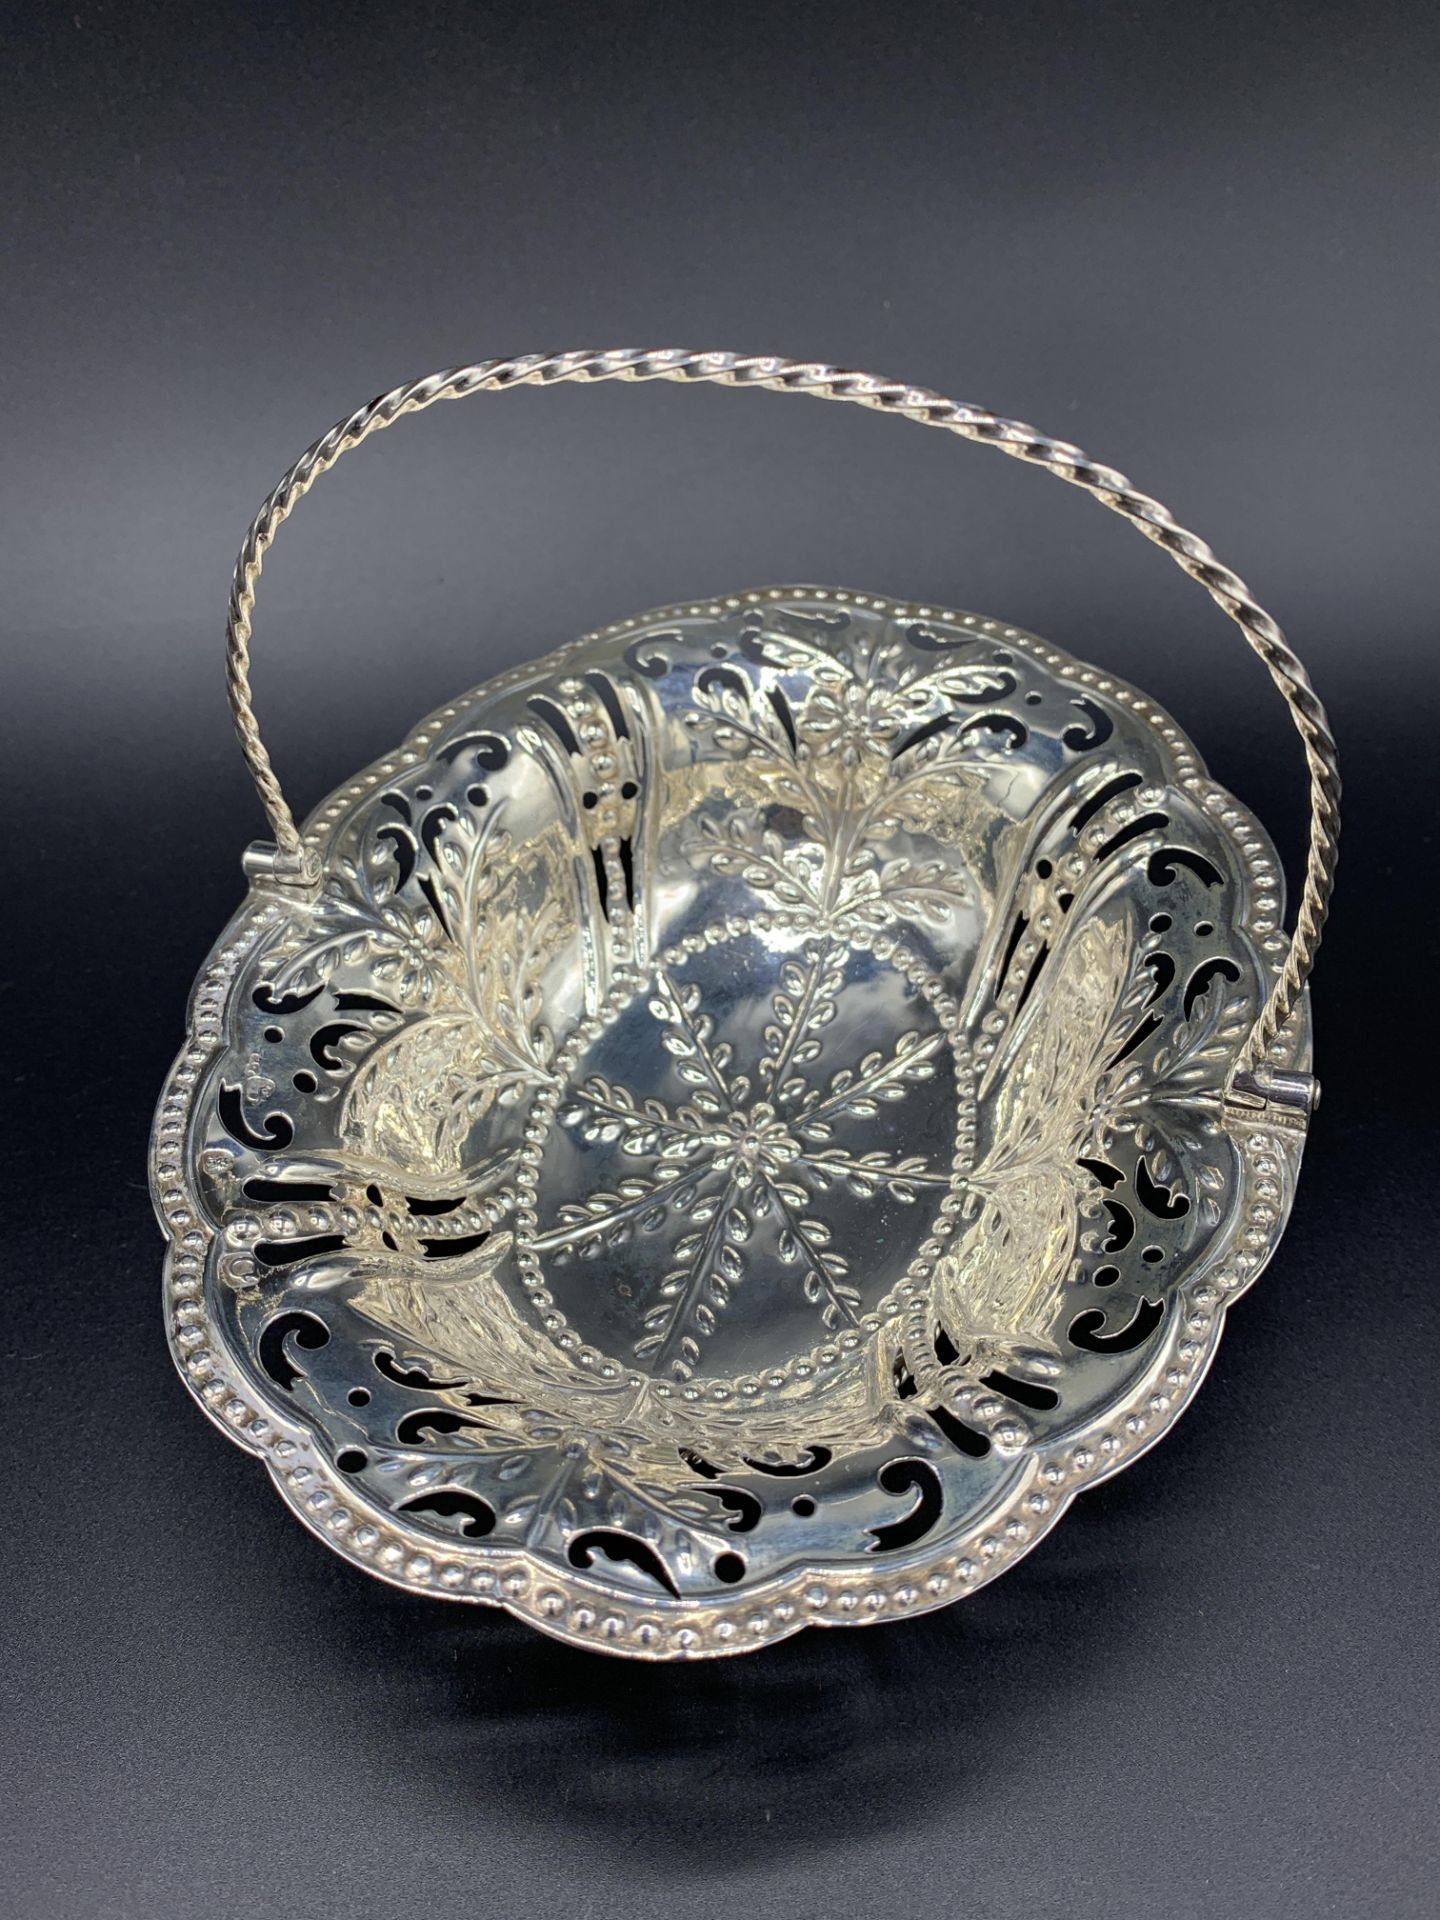 George III silver fruit basket 1769 - Image 2 of 4